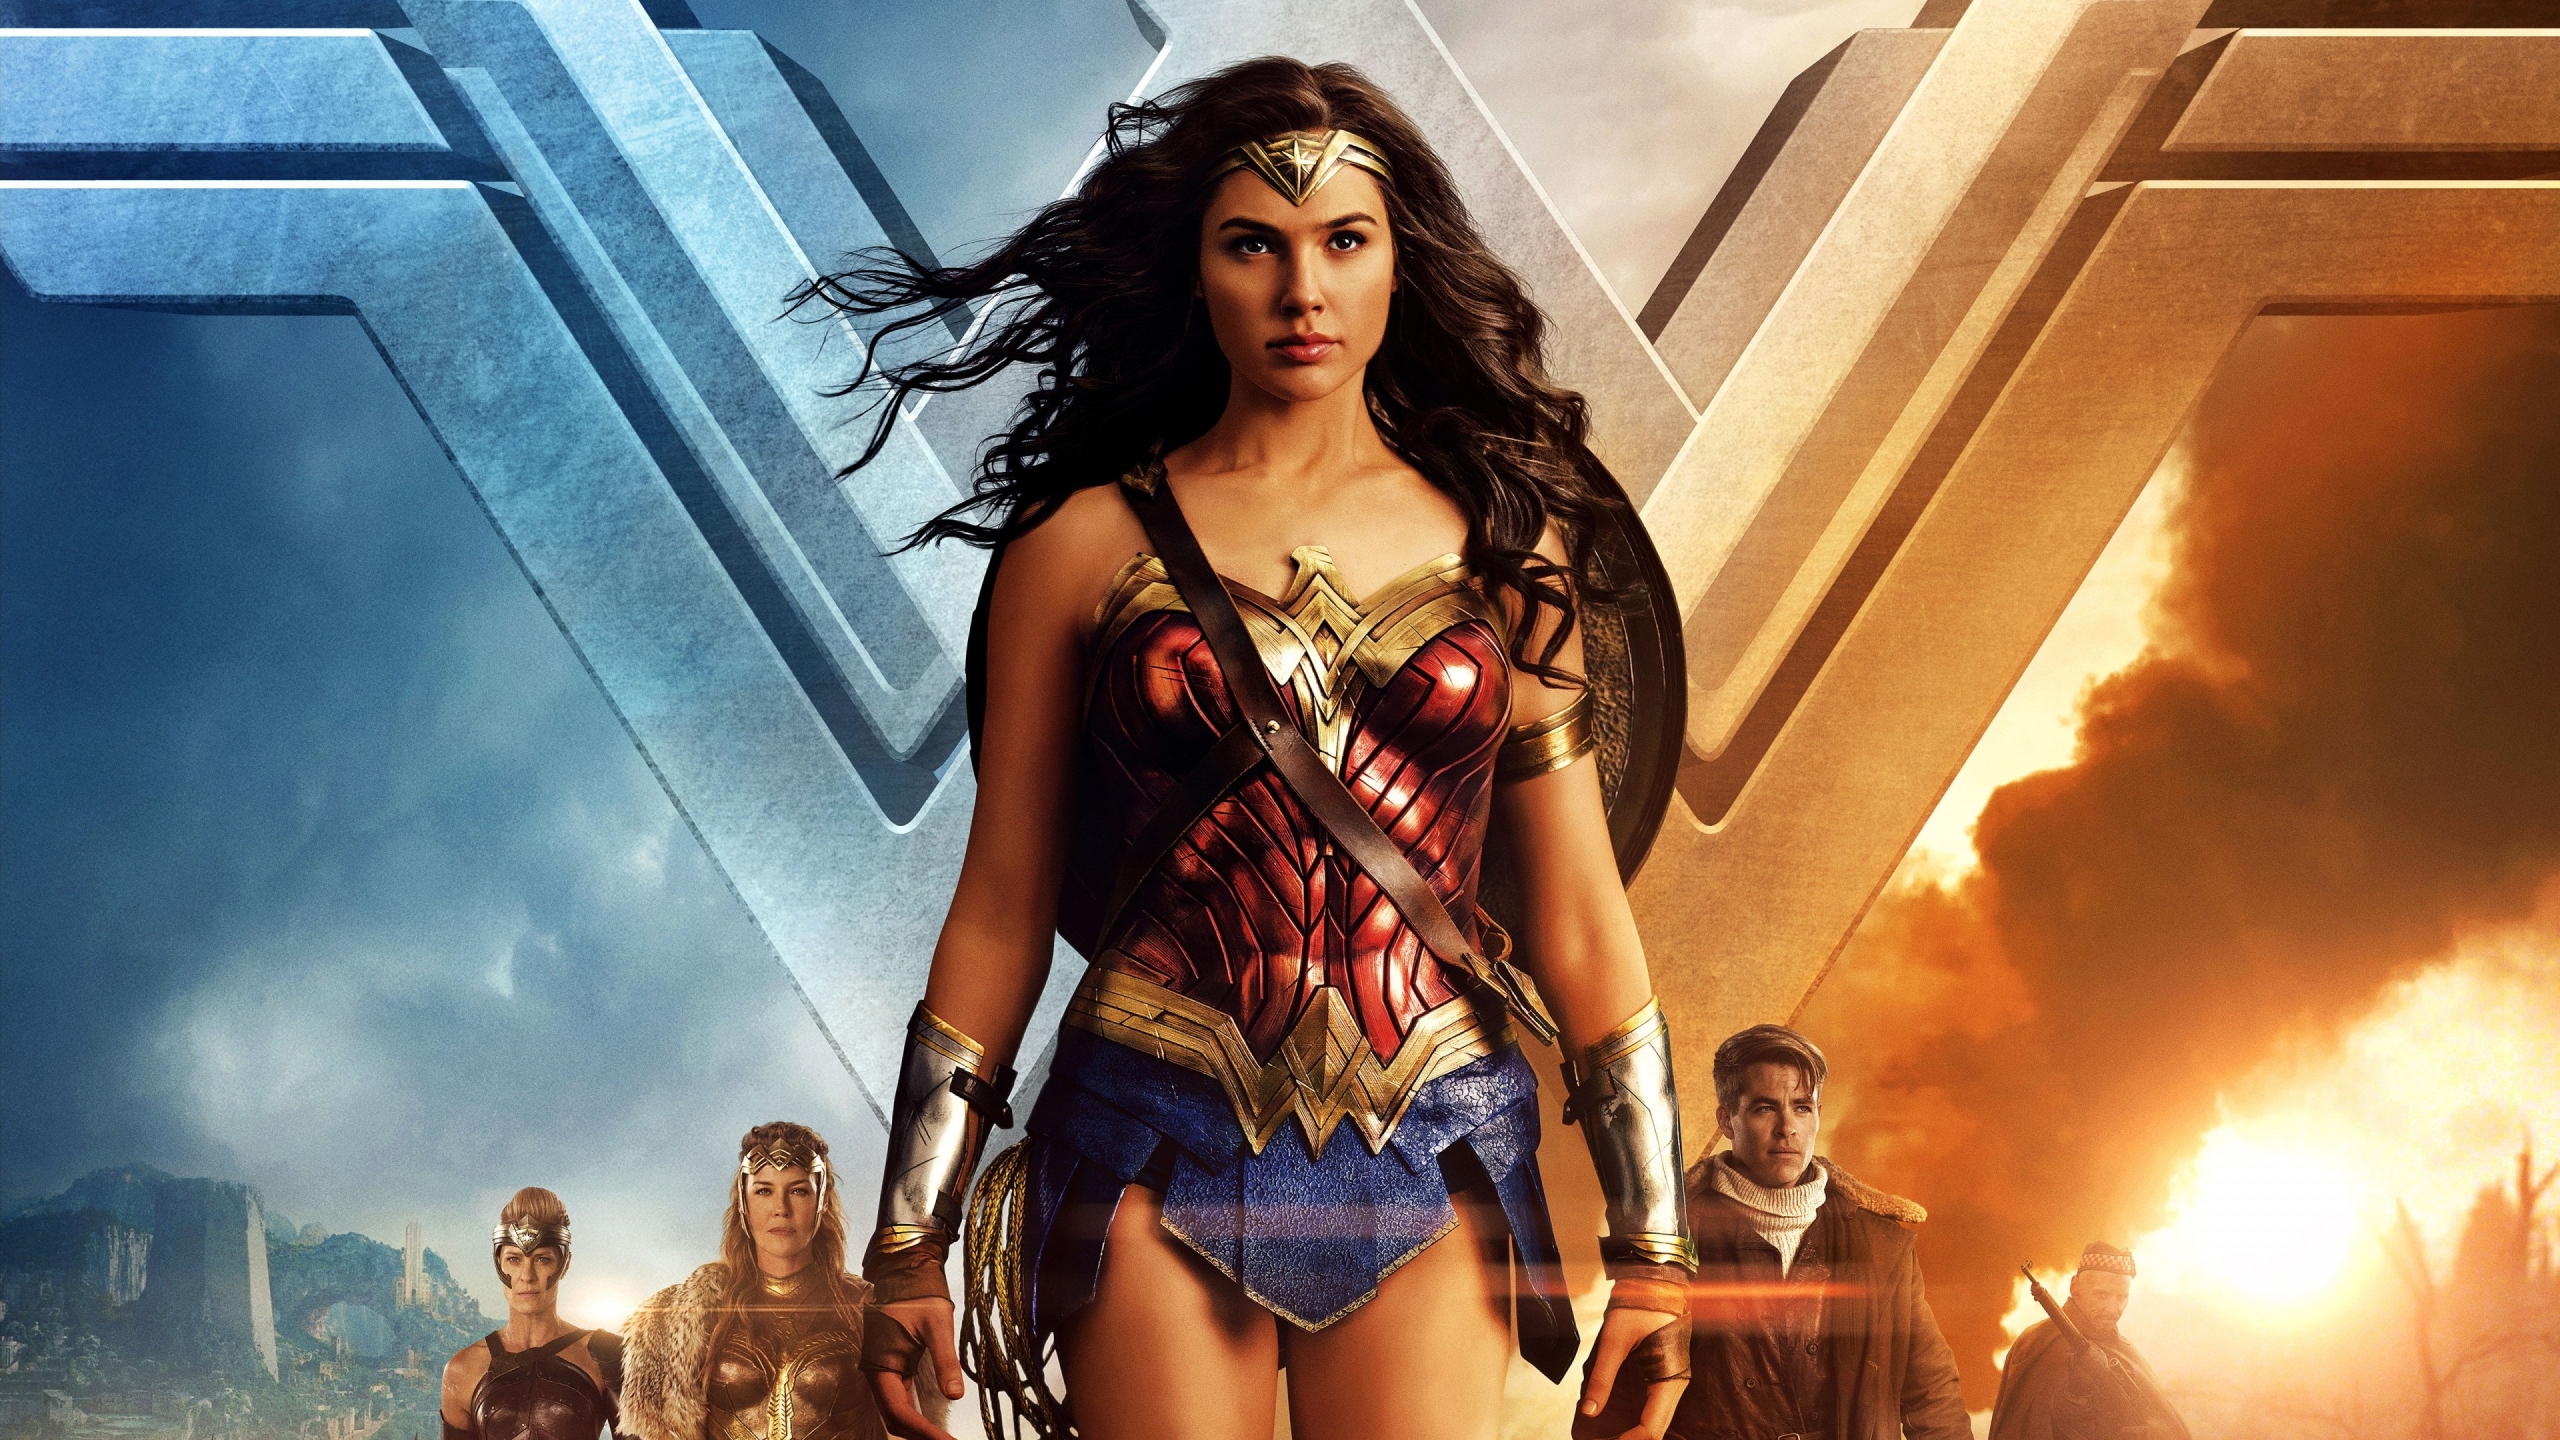 Wonder Woman Gal Gadot 2017 for 2560 x 1440 HDTV resolution